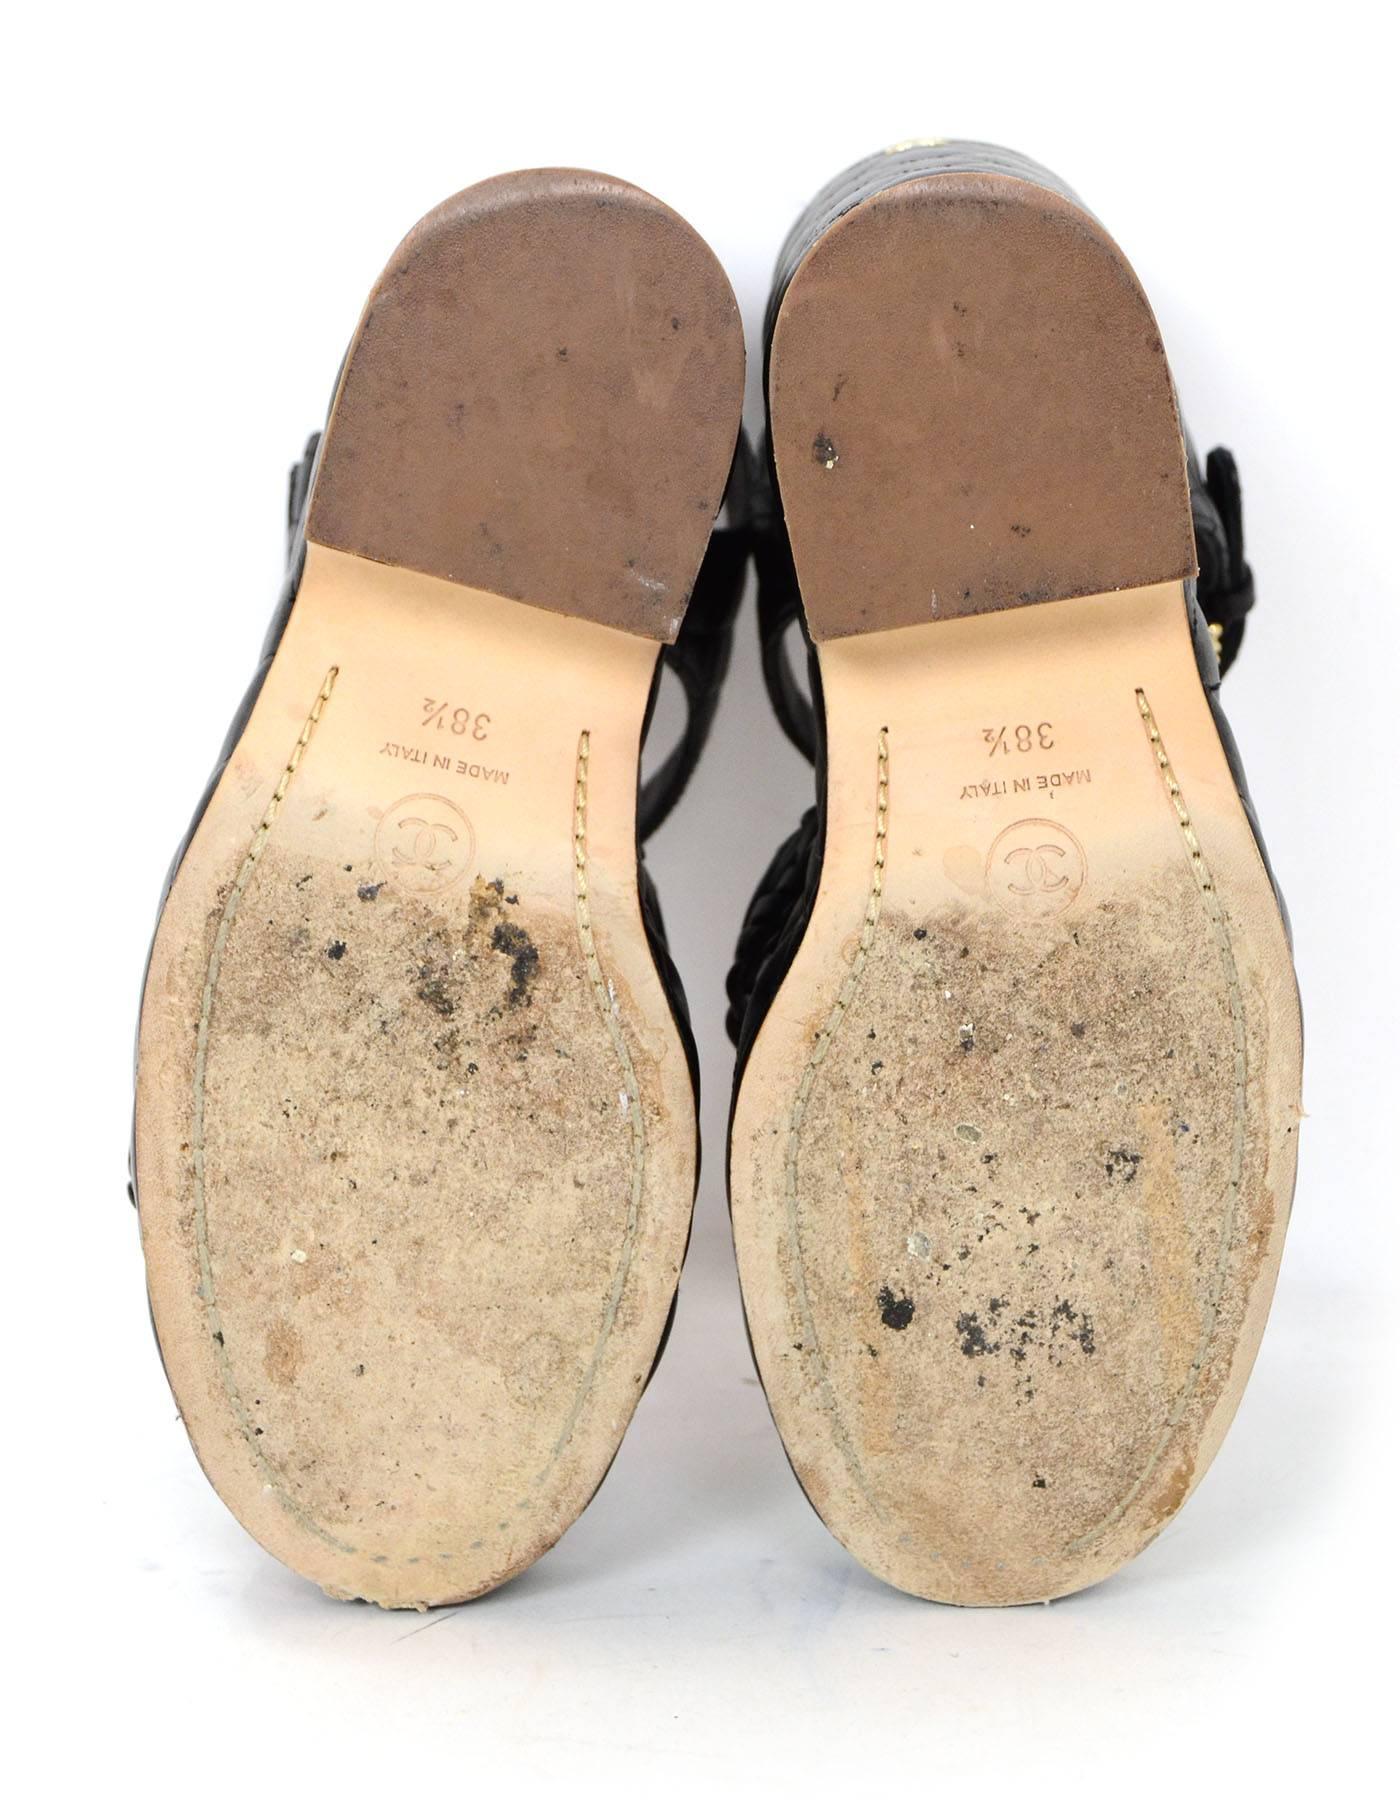 Chanel Black Quilted Platform Sandals Sz 38.5 rt. $1, 550 1